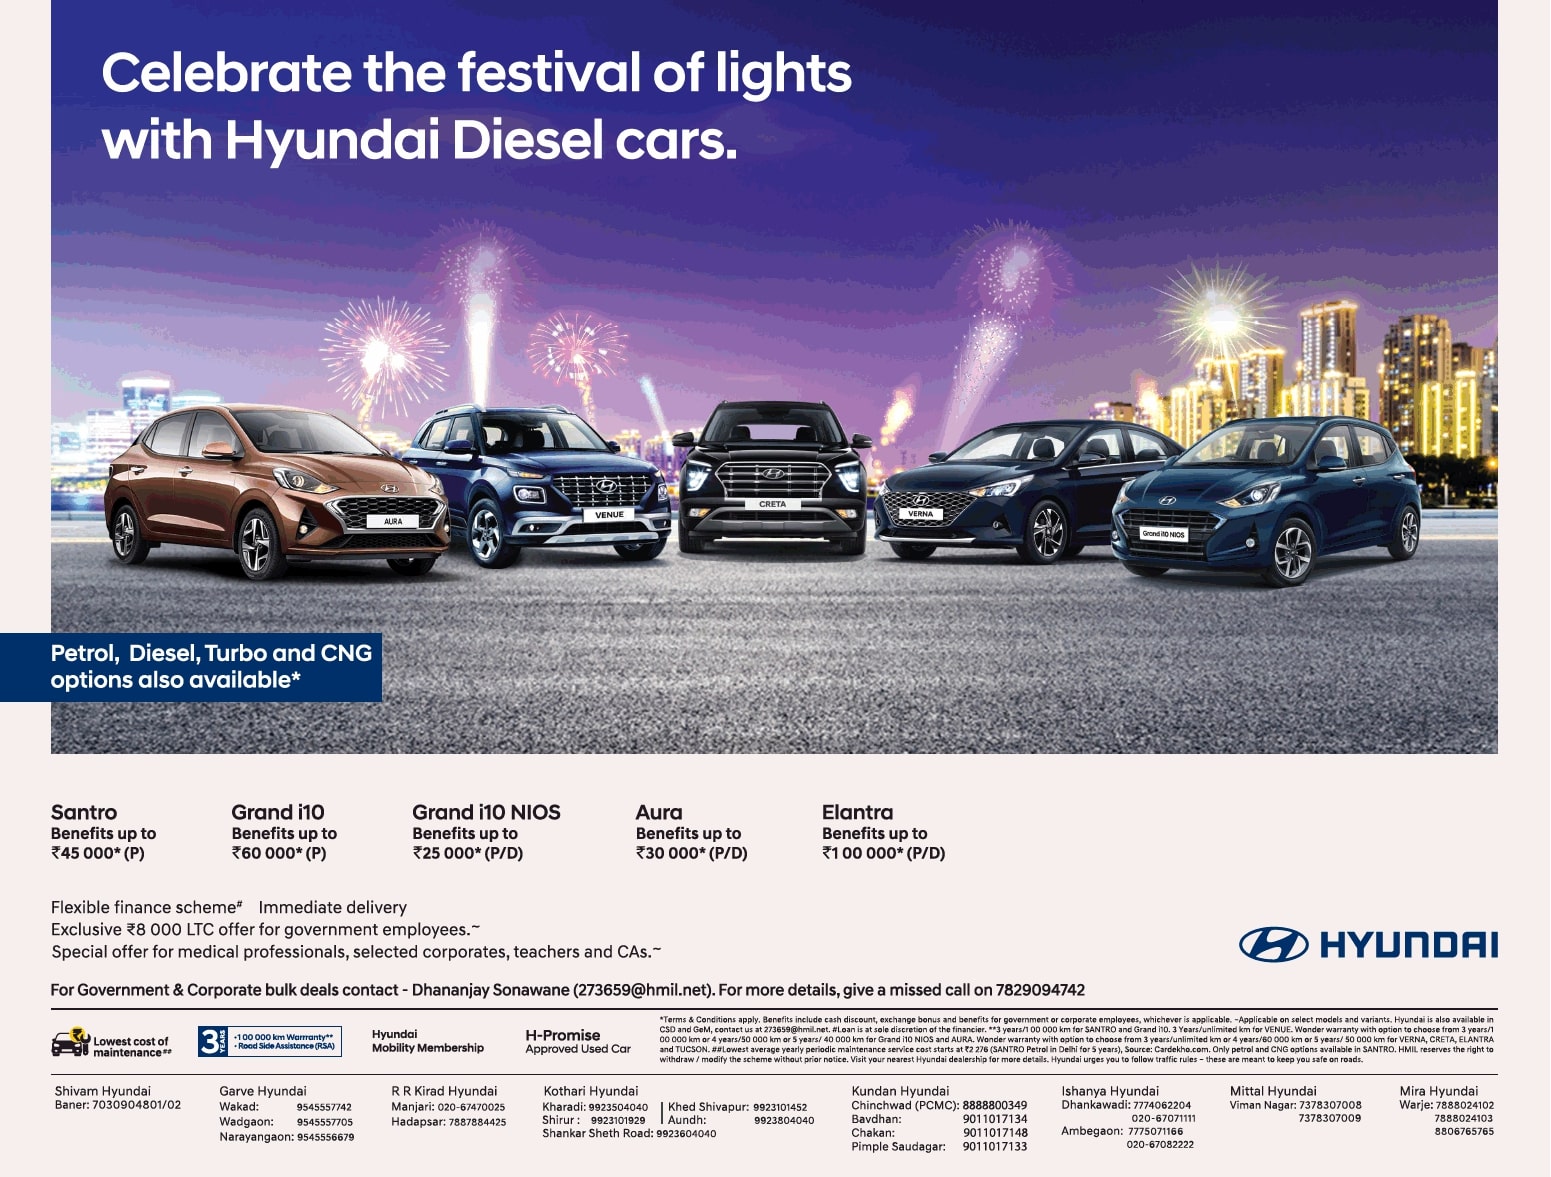 hyundai-celebrate-the-festival-of-lights-with-hyundai-diesel-cars-ad-toi-kolkata-12-11-2020